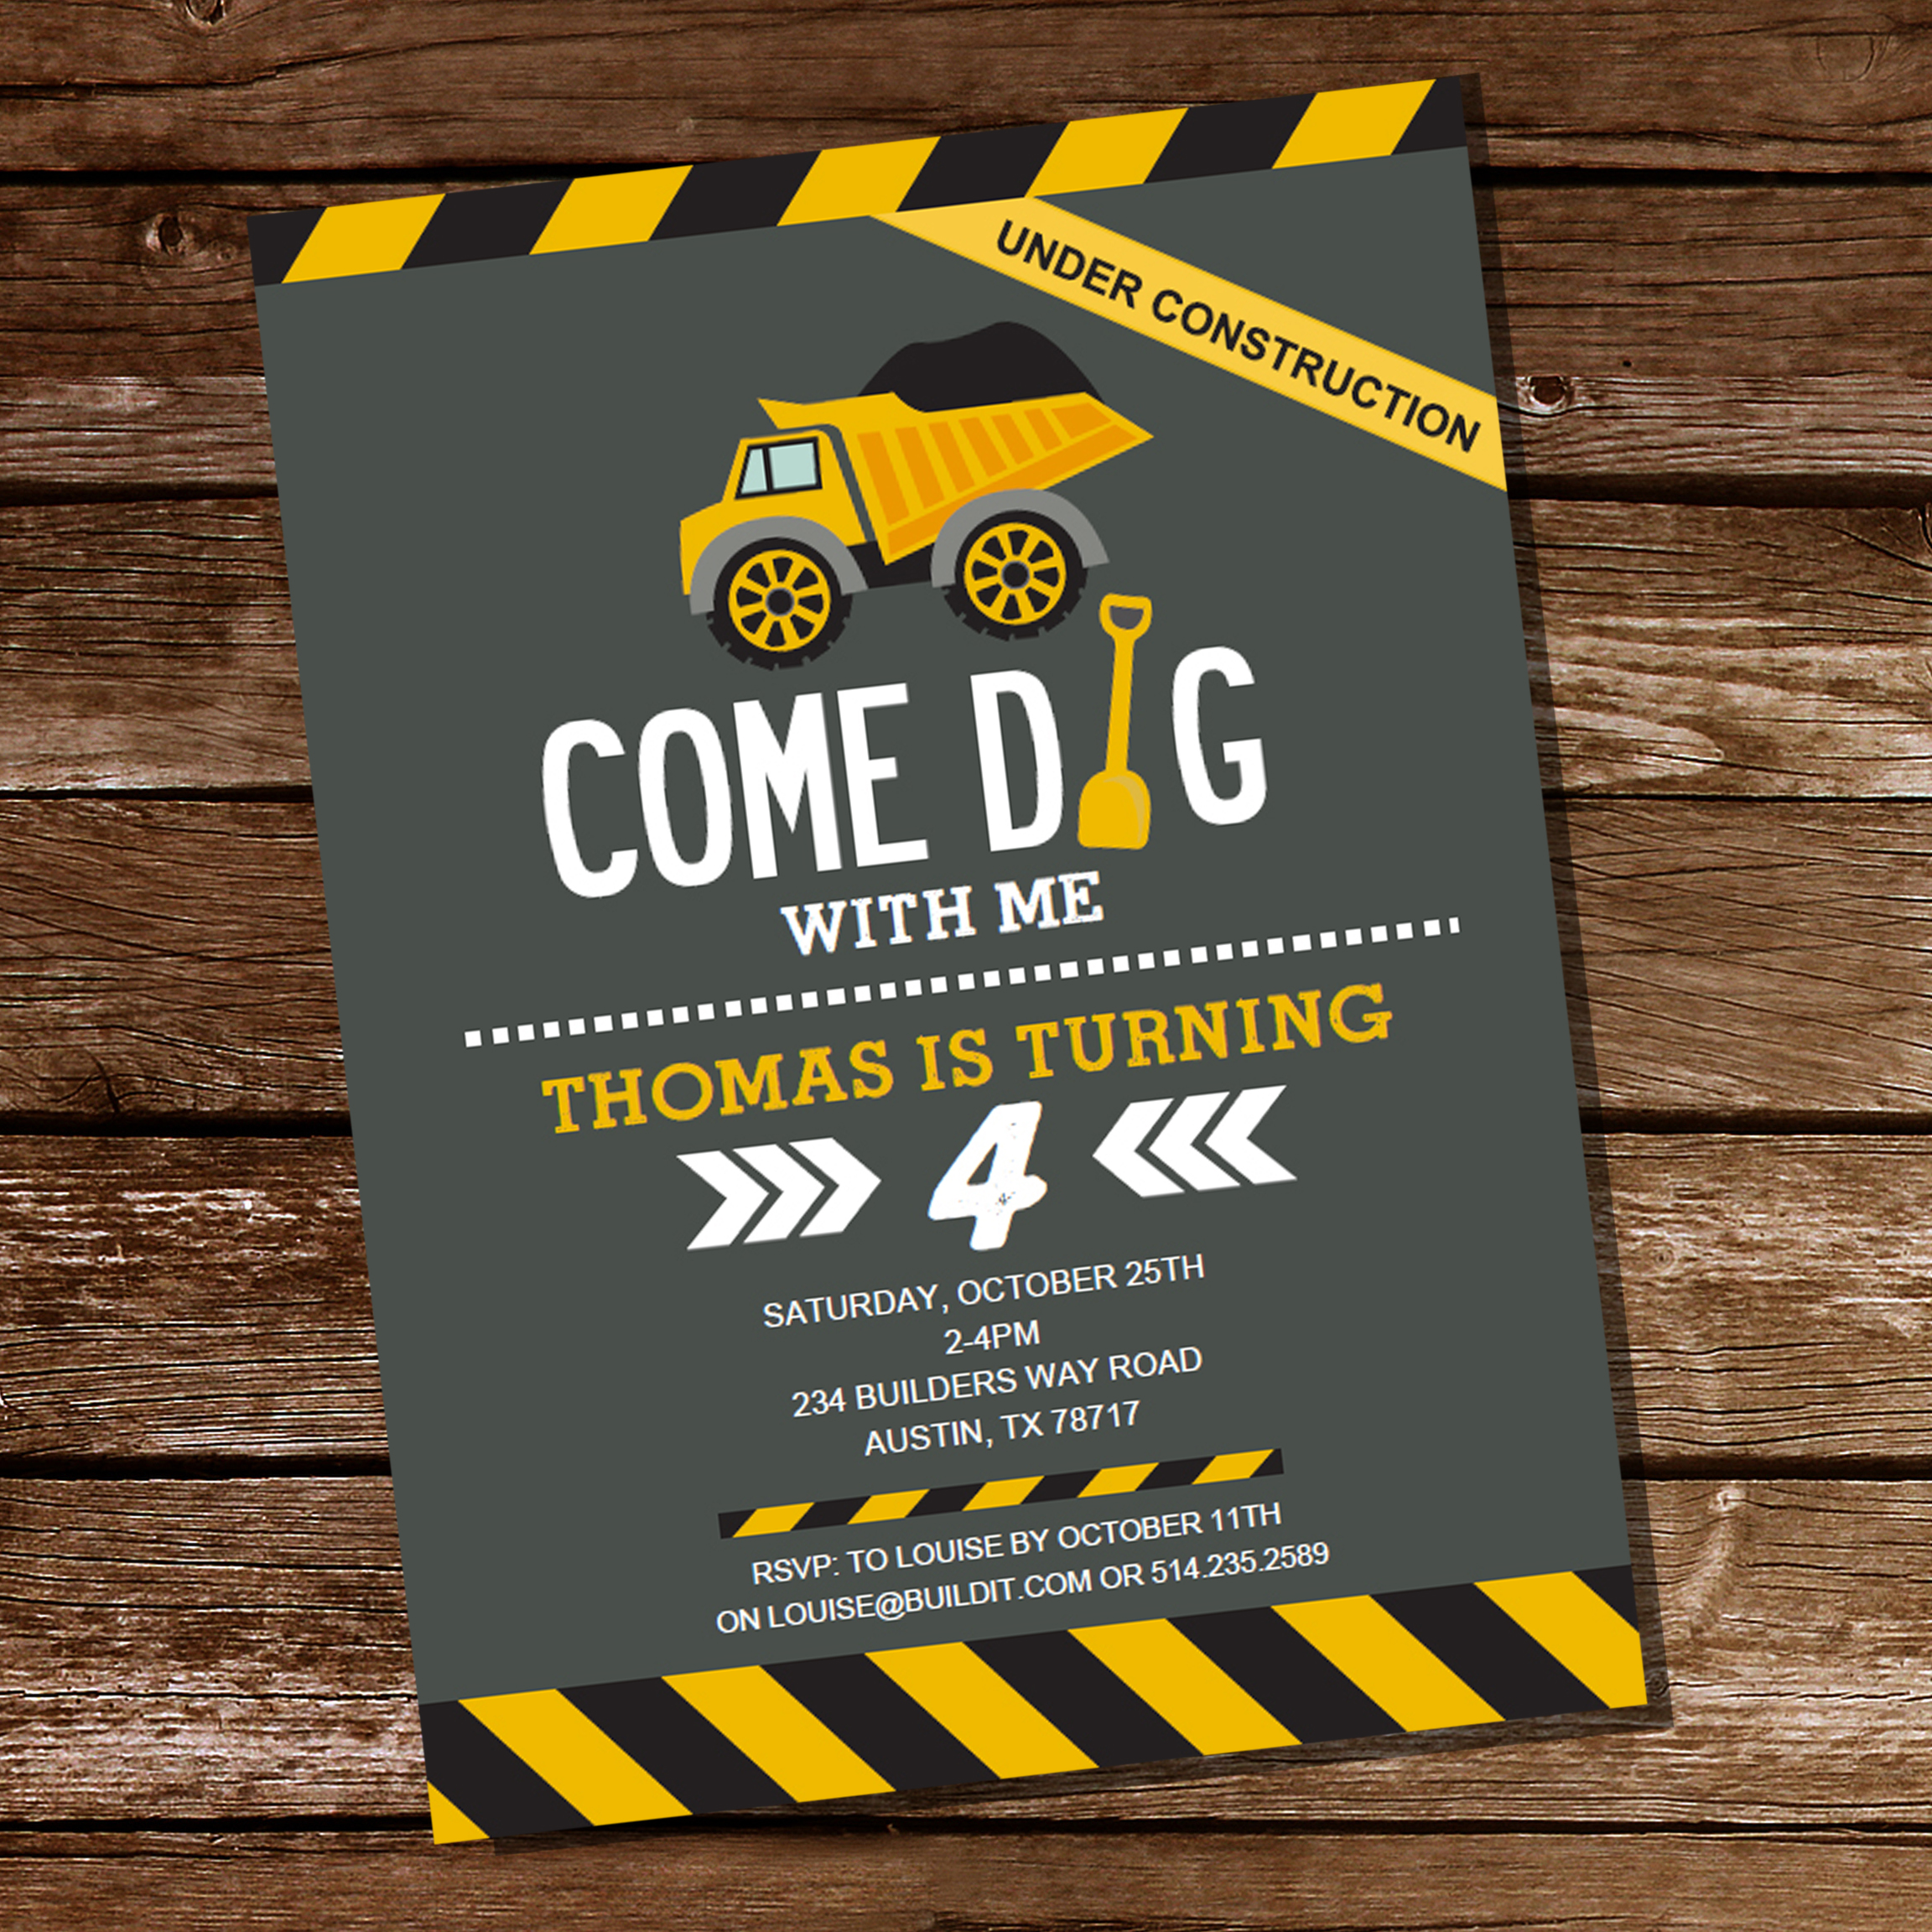 Dump Truck Construction Party Invitation